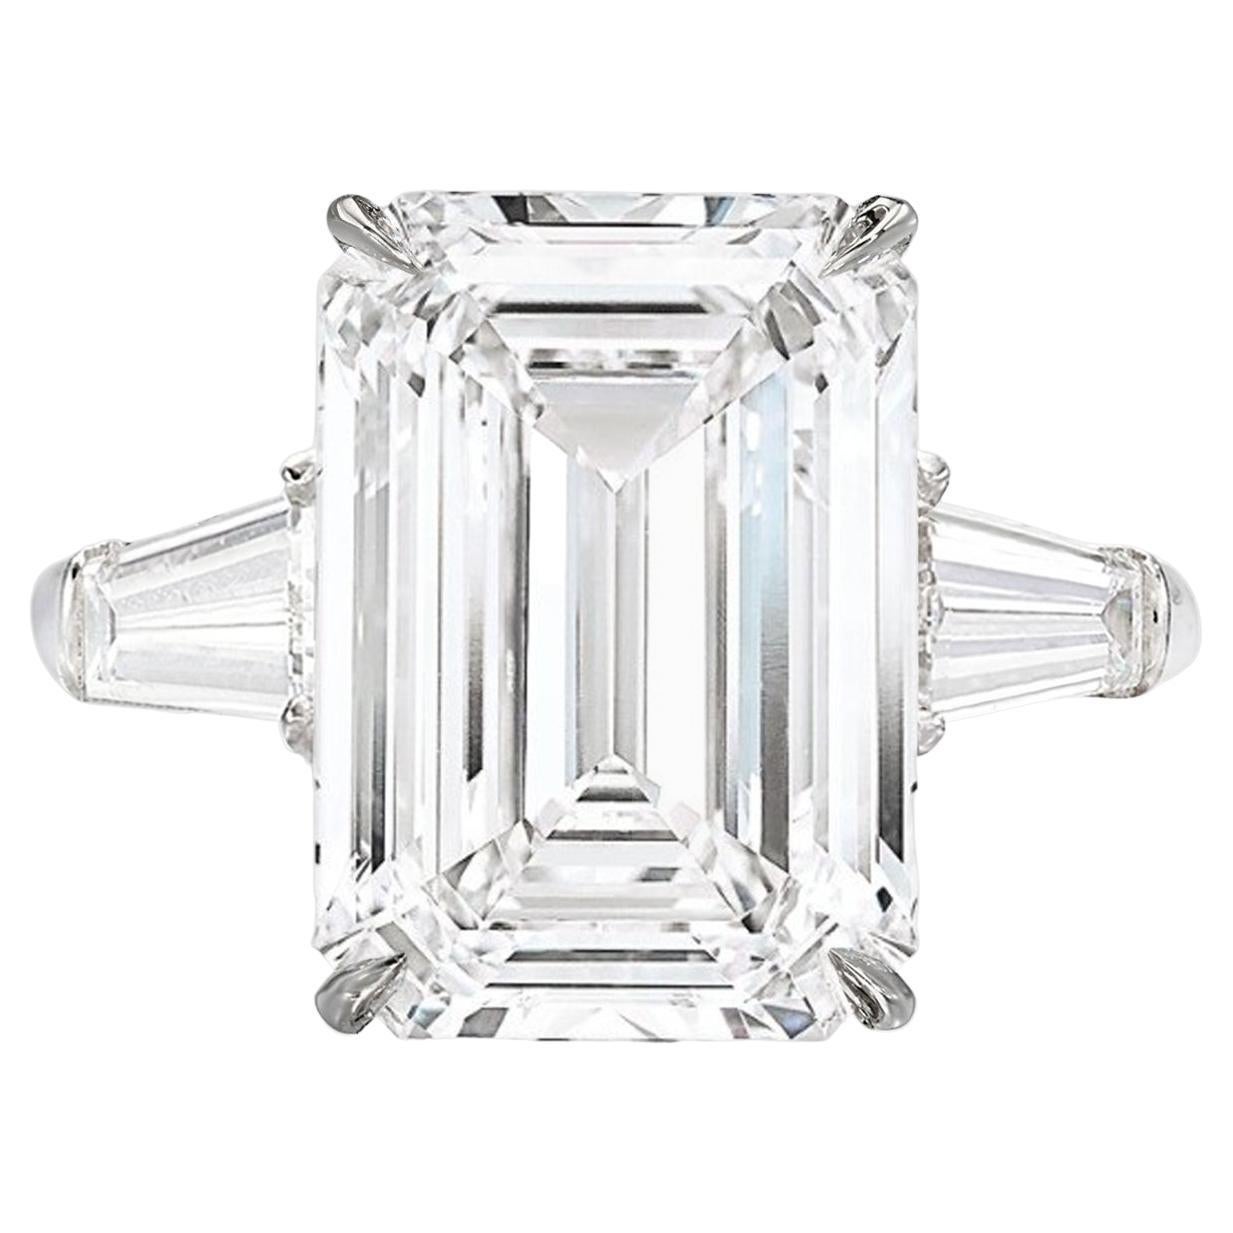 GIA Certified 7.44 Carat Emerald Cut Flawless Clarity Diamond Ring